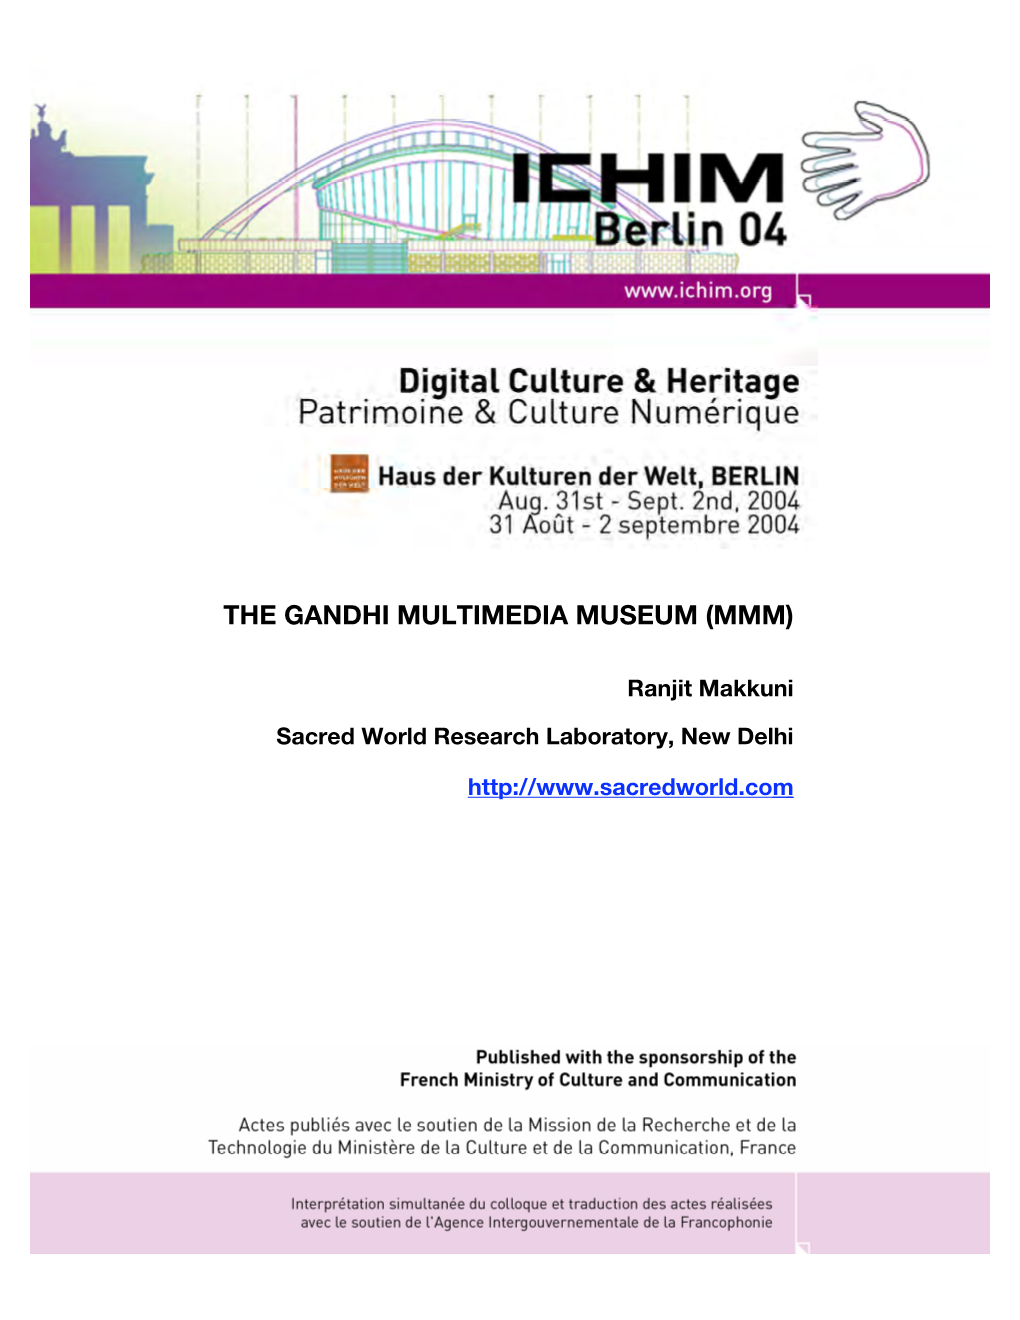 The Gandhi Multimedia Museum (Mmm)